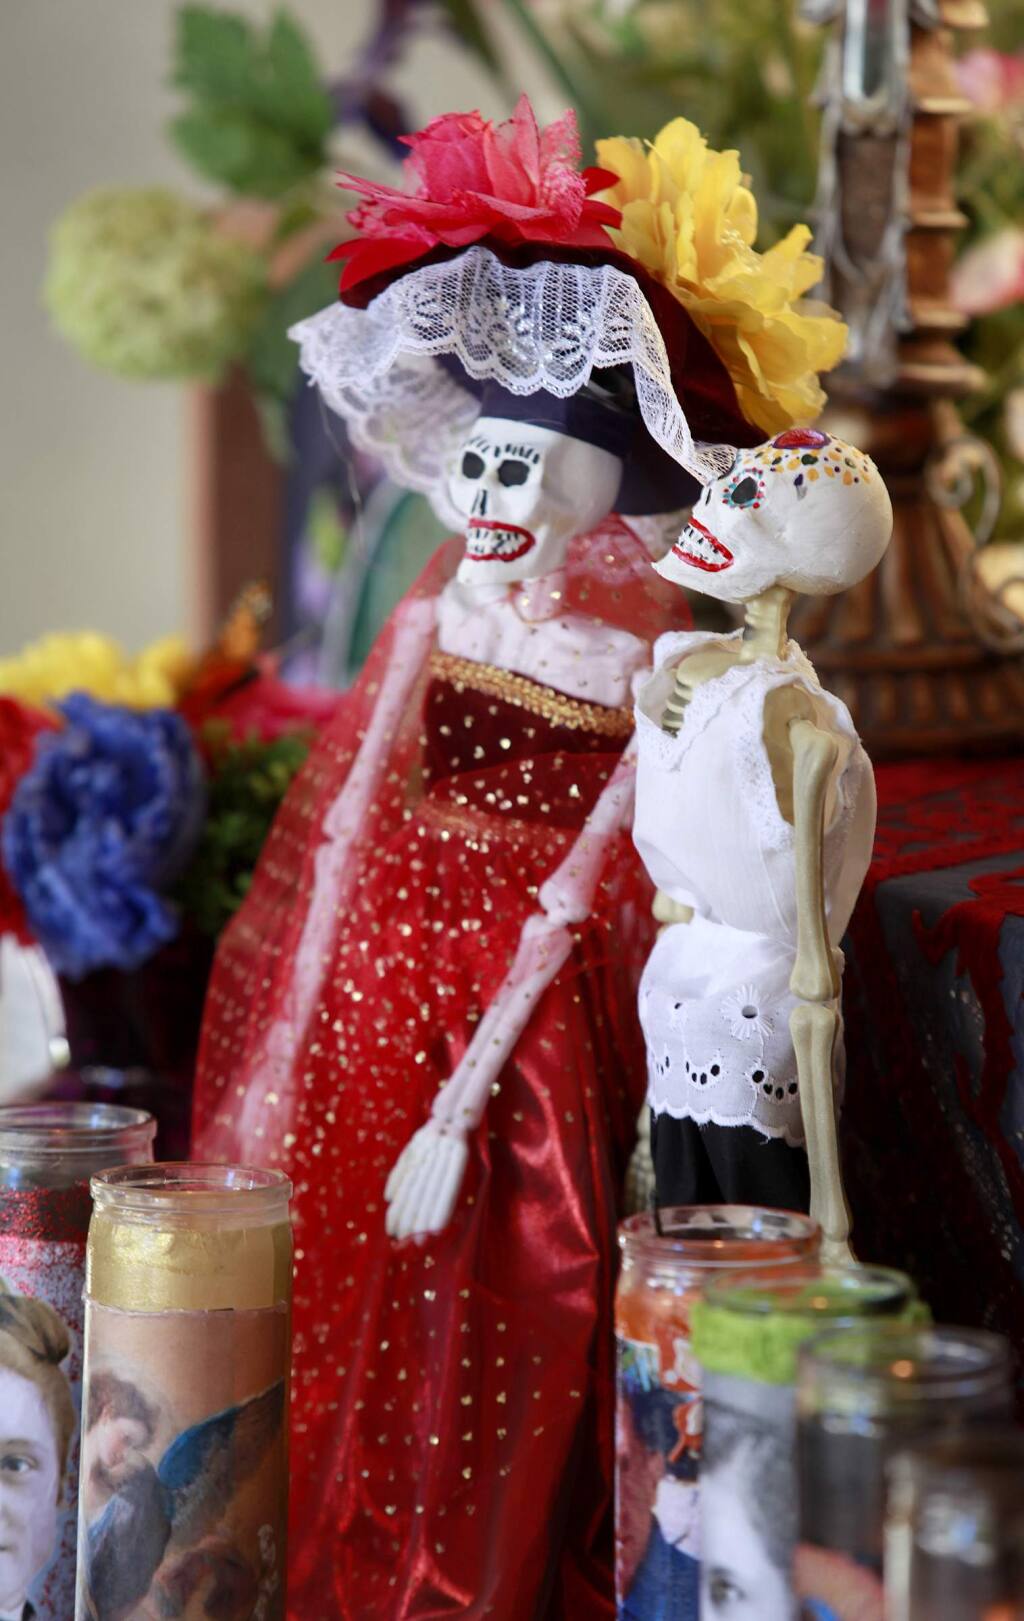 Skeletons decorate an altar during a Dia de los Muertos celebration at Old Courthouse Square in Santa Rosa on Sunday, Nov. 2, 2014. (BETH SCHLANKER/ PD FILE)